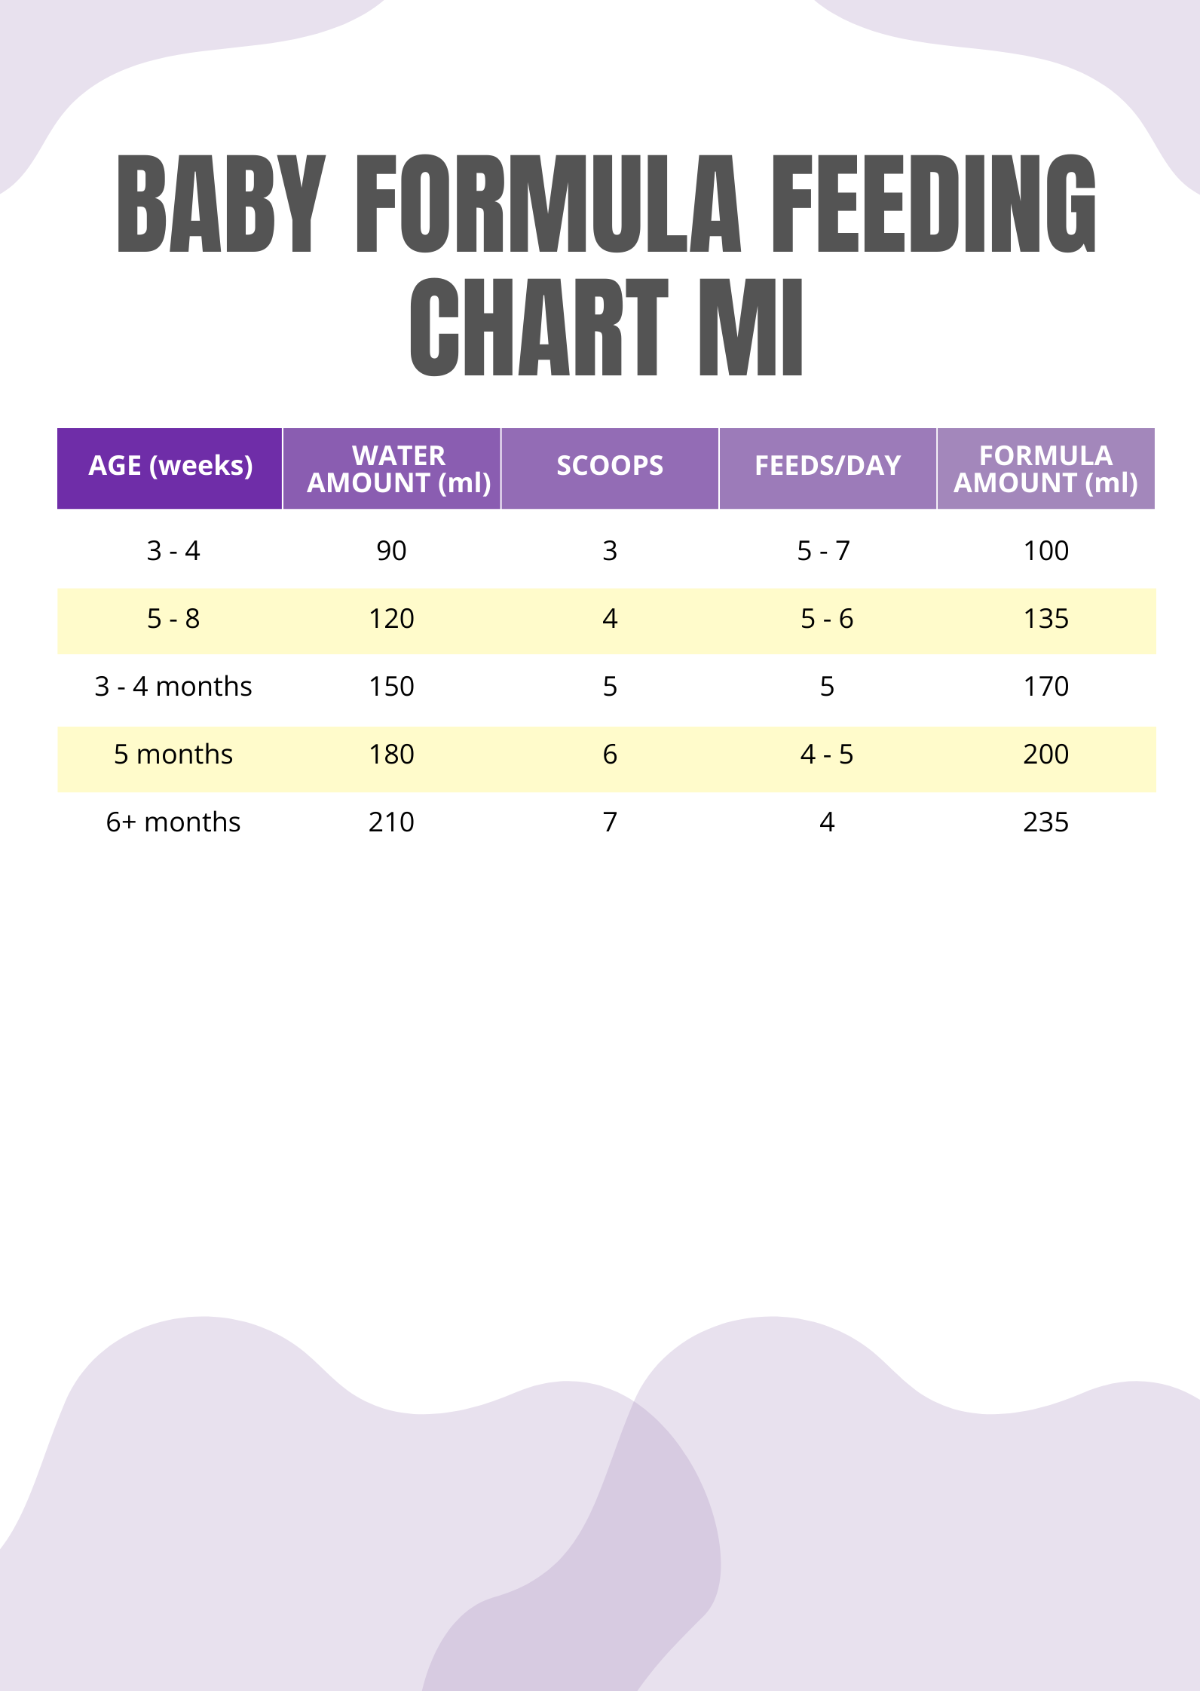 Baby Formula Feeding Chart Ml Template